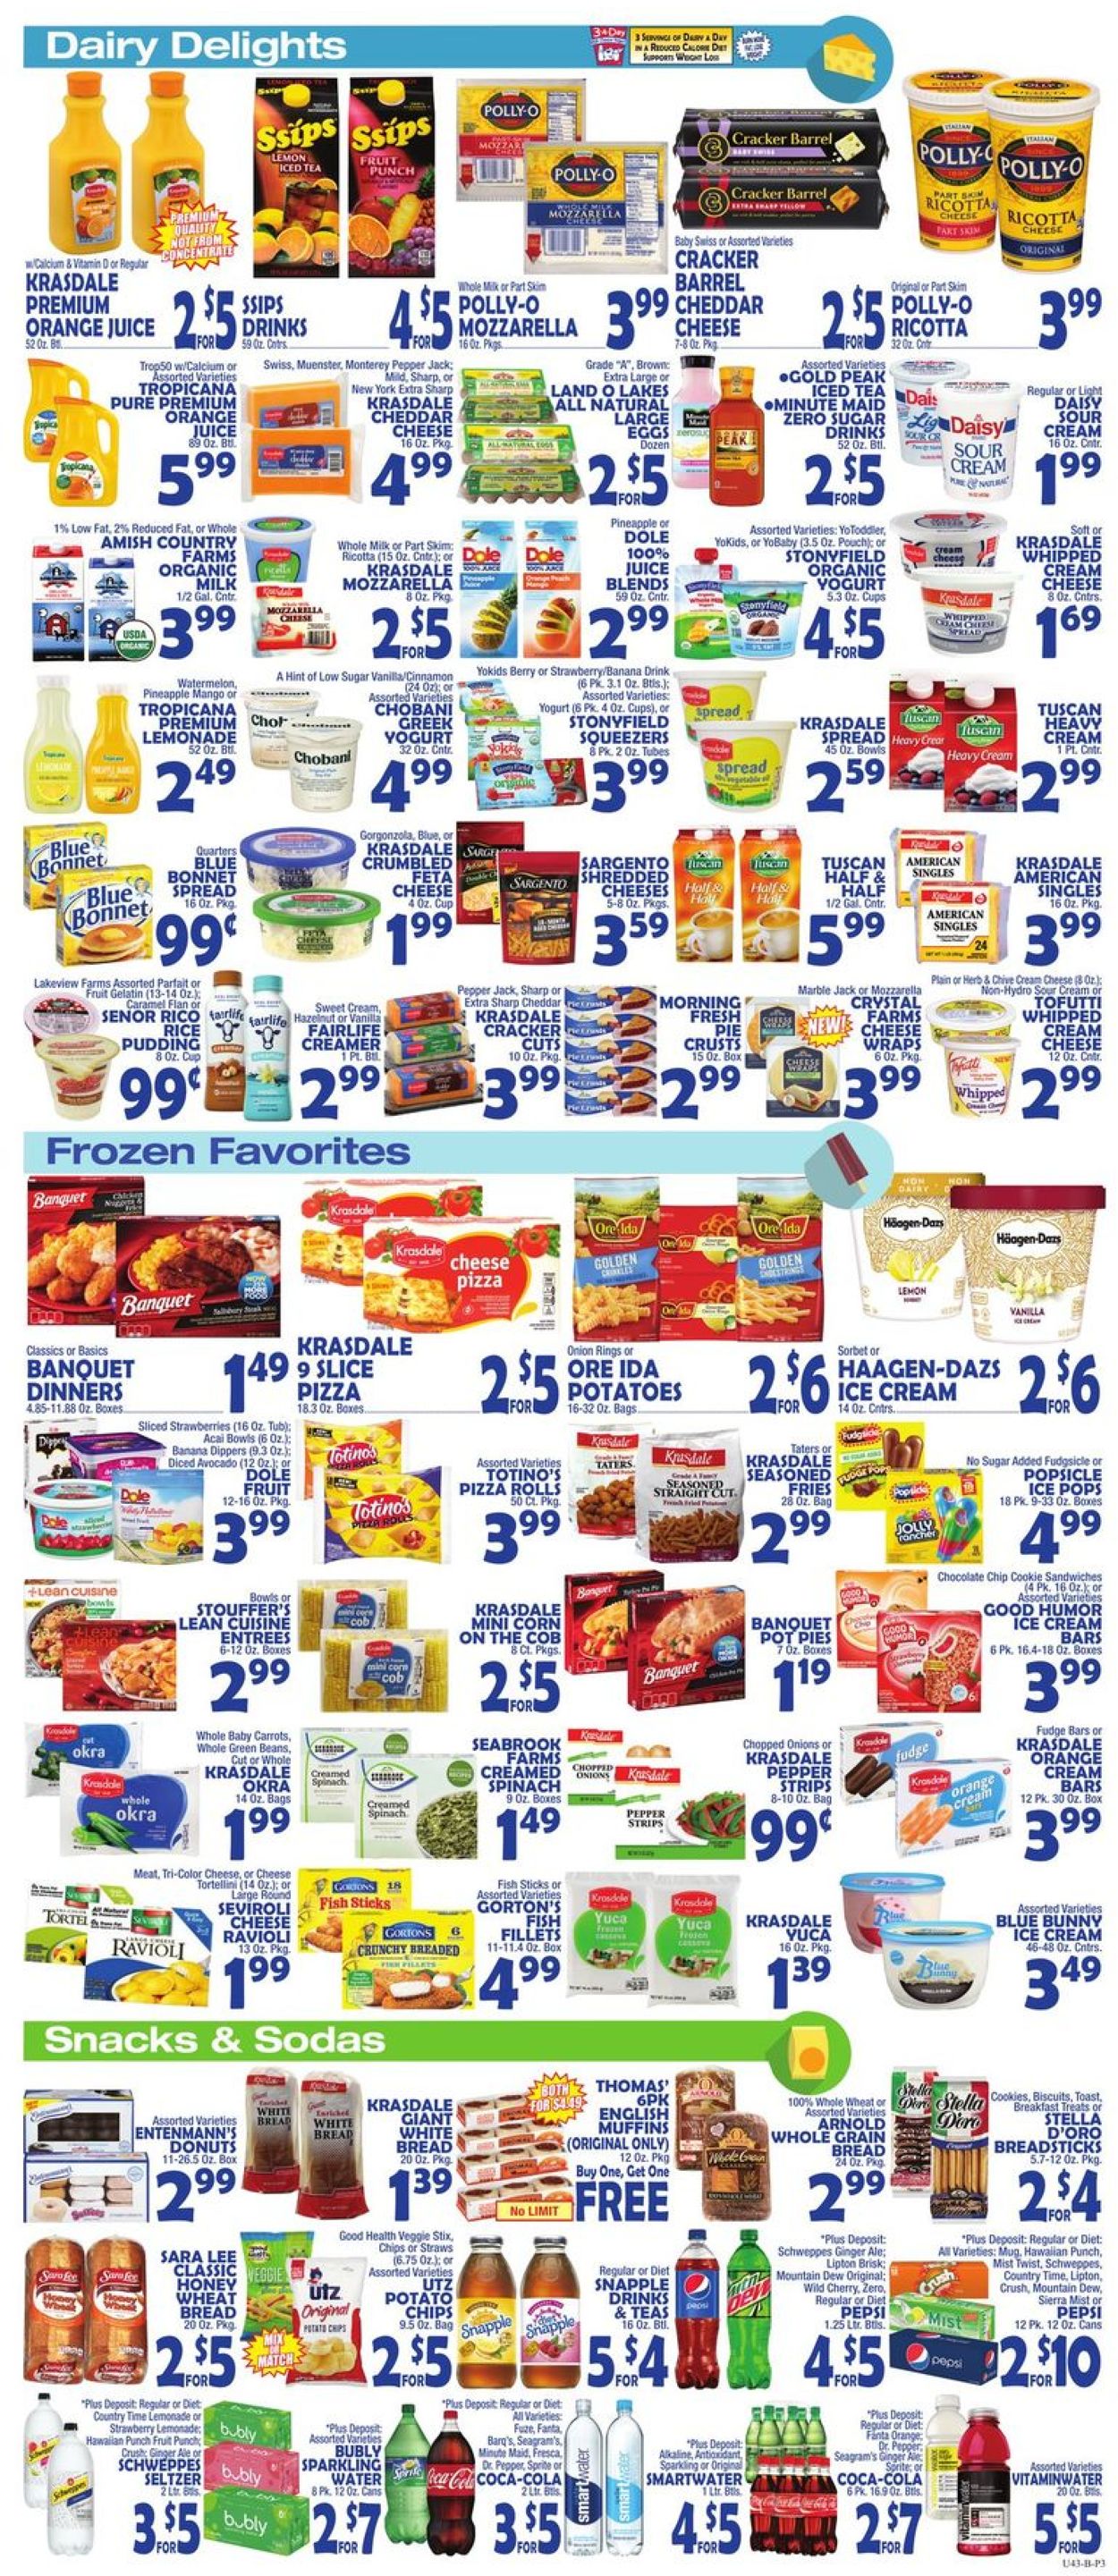 Catalogue Bravo Supermarkets from 10/09/2020